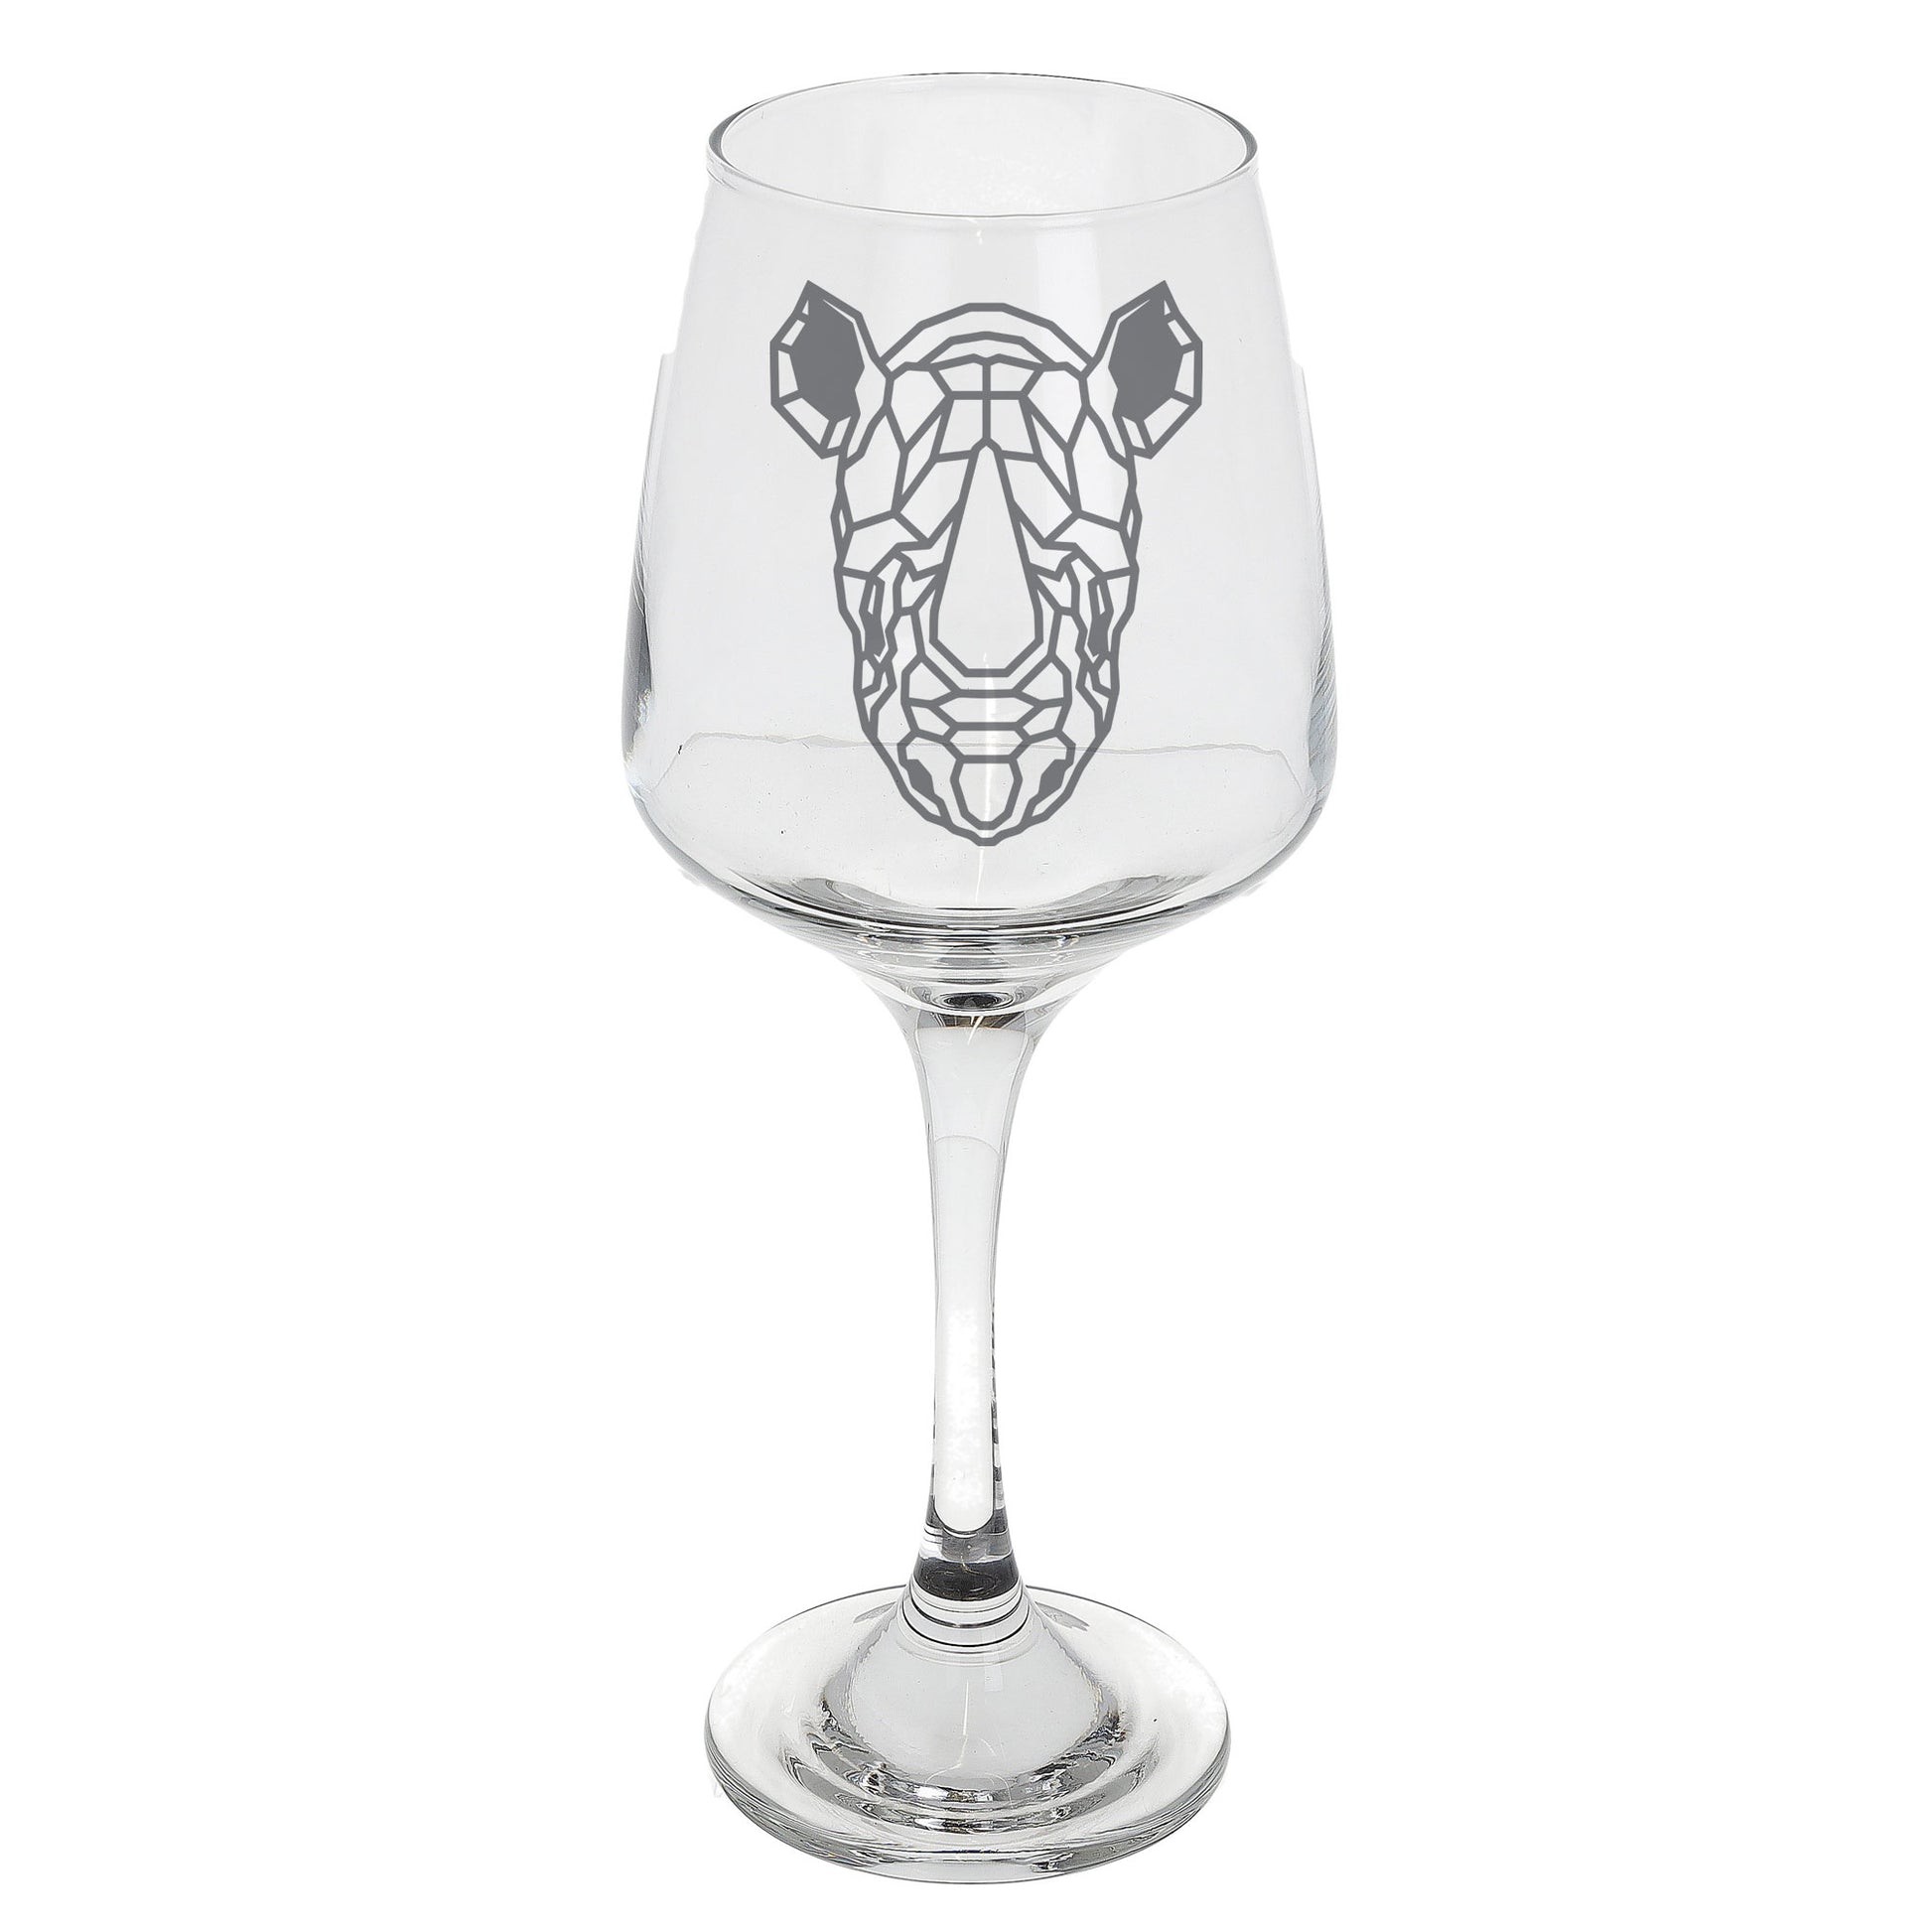 Rhino Engraved Wine Glass  - Always Looking Good -   